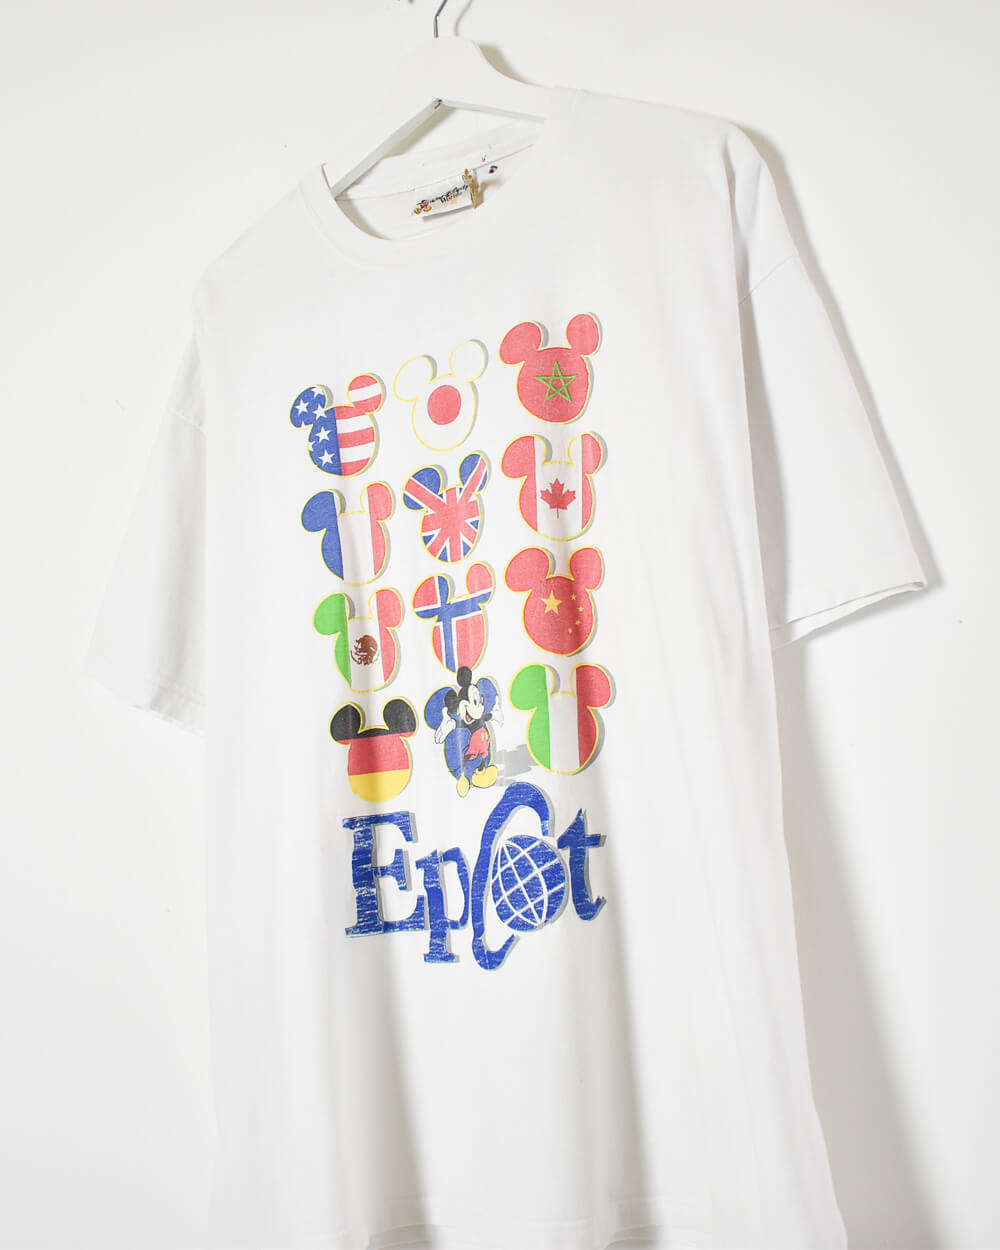 Stone Walt Disney World Epcot T-Shirt - Large